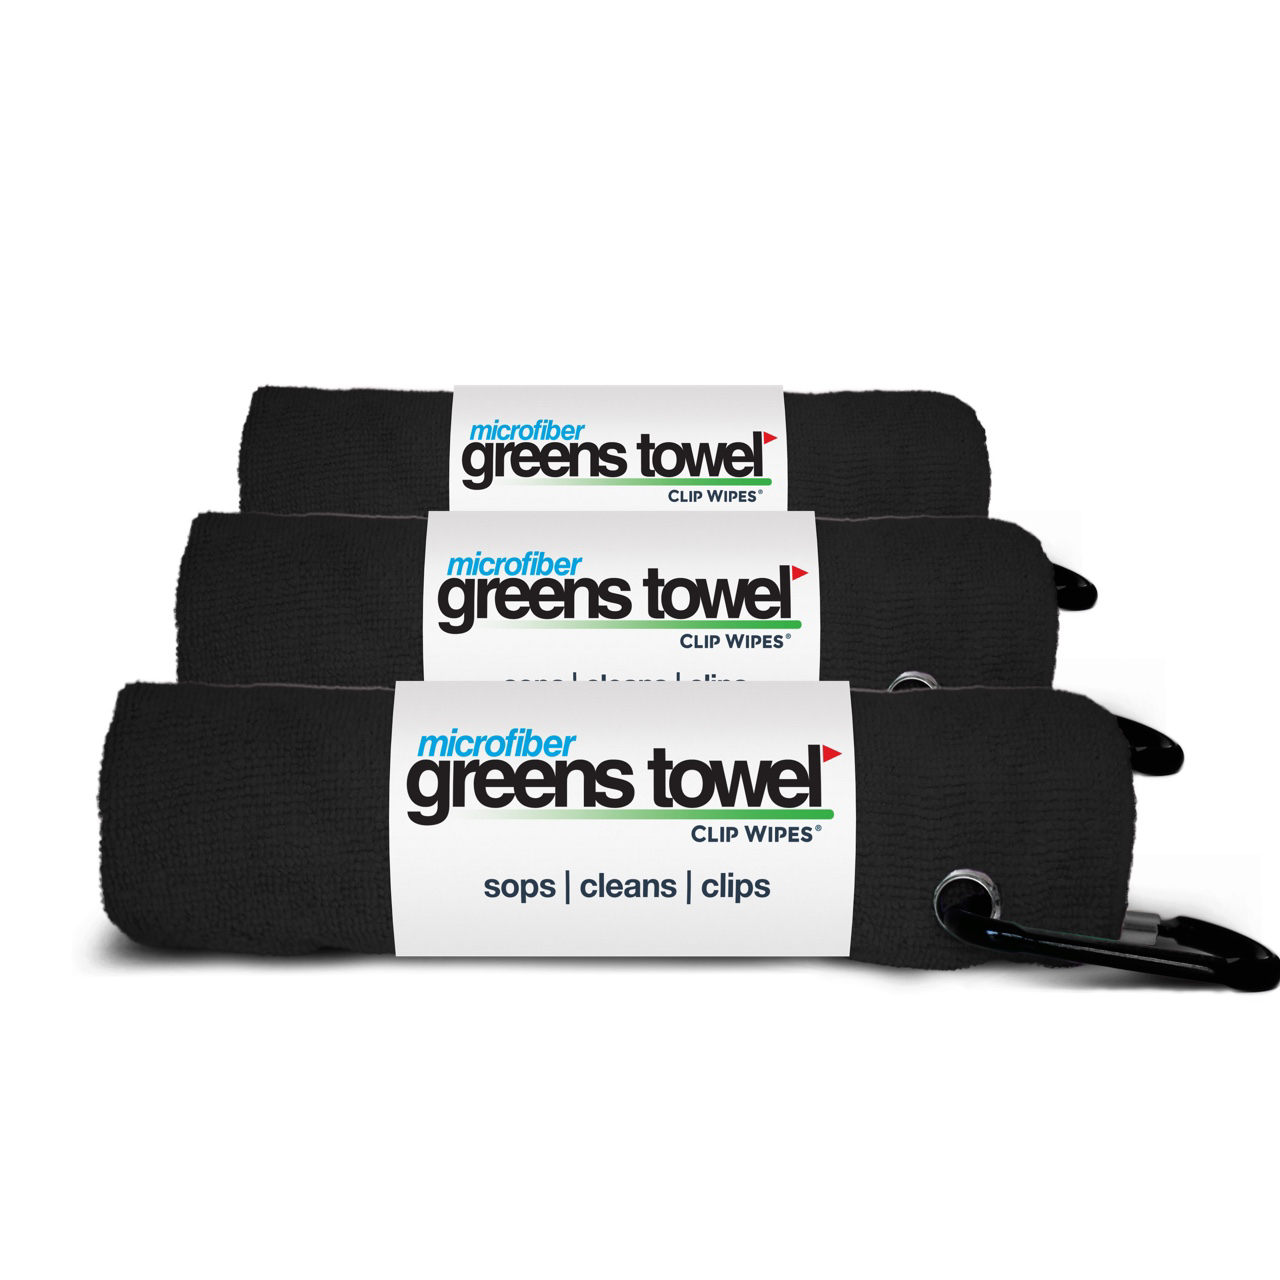 Microfiber Golf Greens Towel Jet Black 3 Pack - image 1 of 2